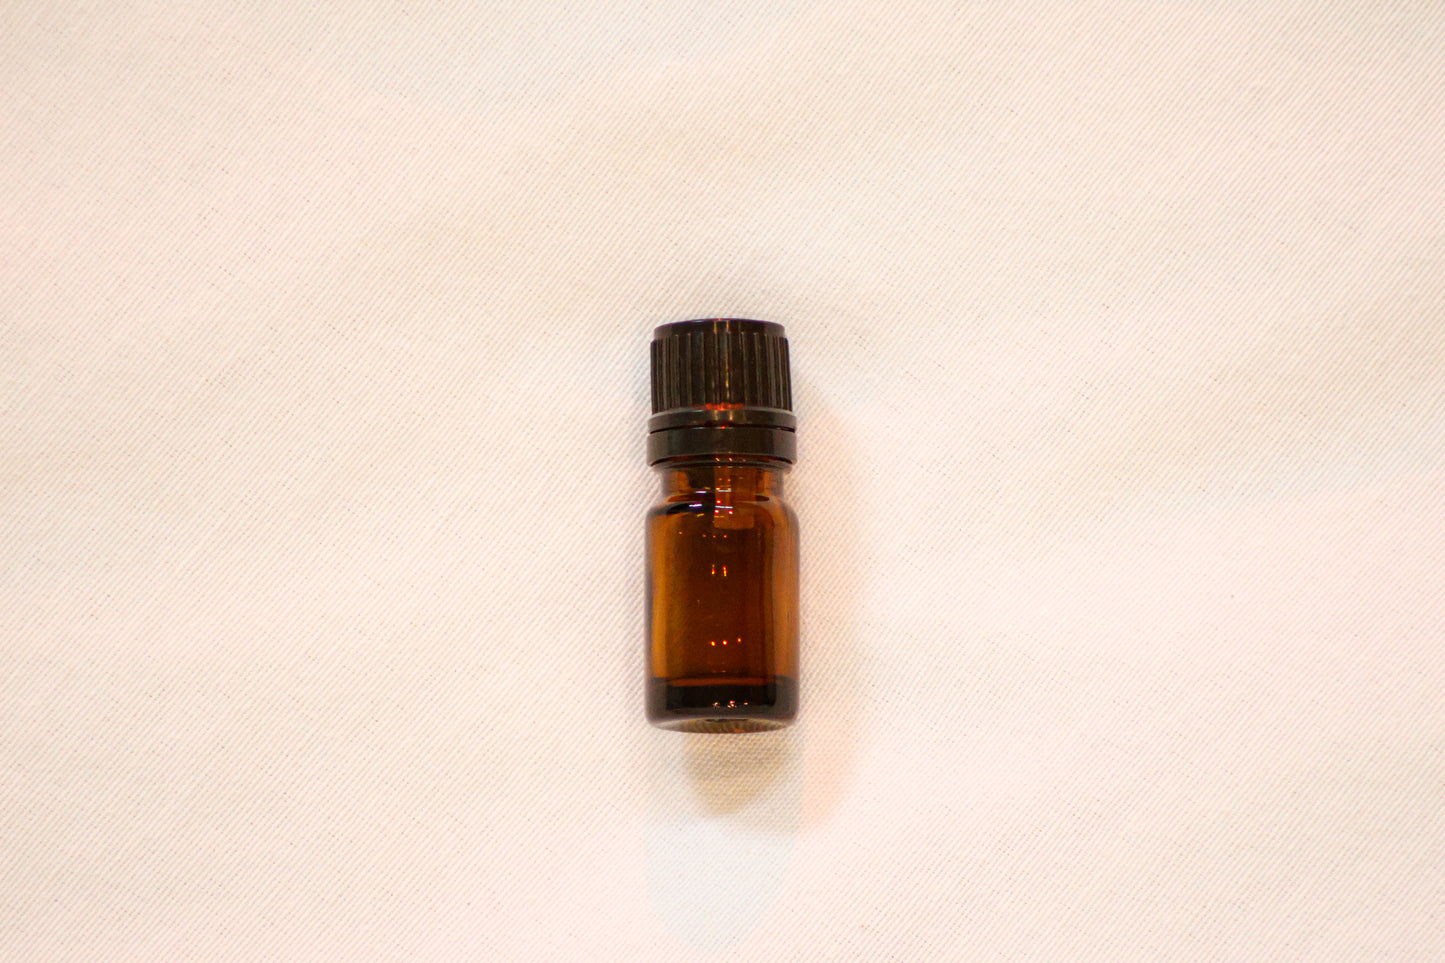 Peppermint Leaf Essential Oil